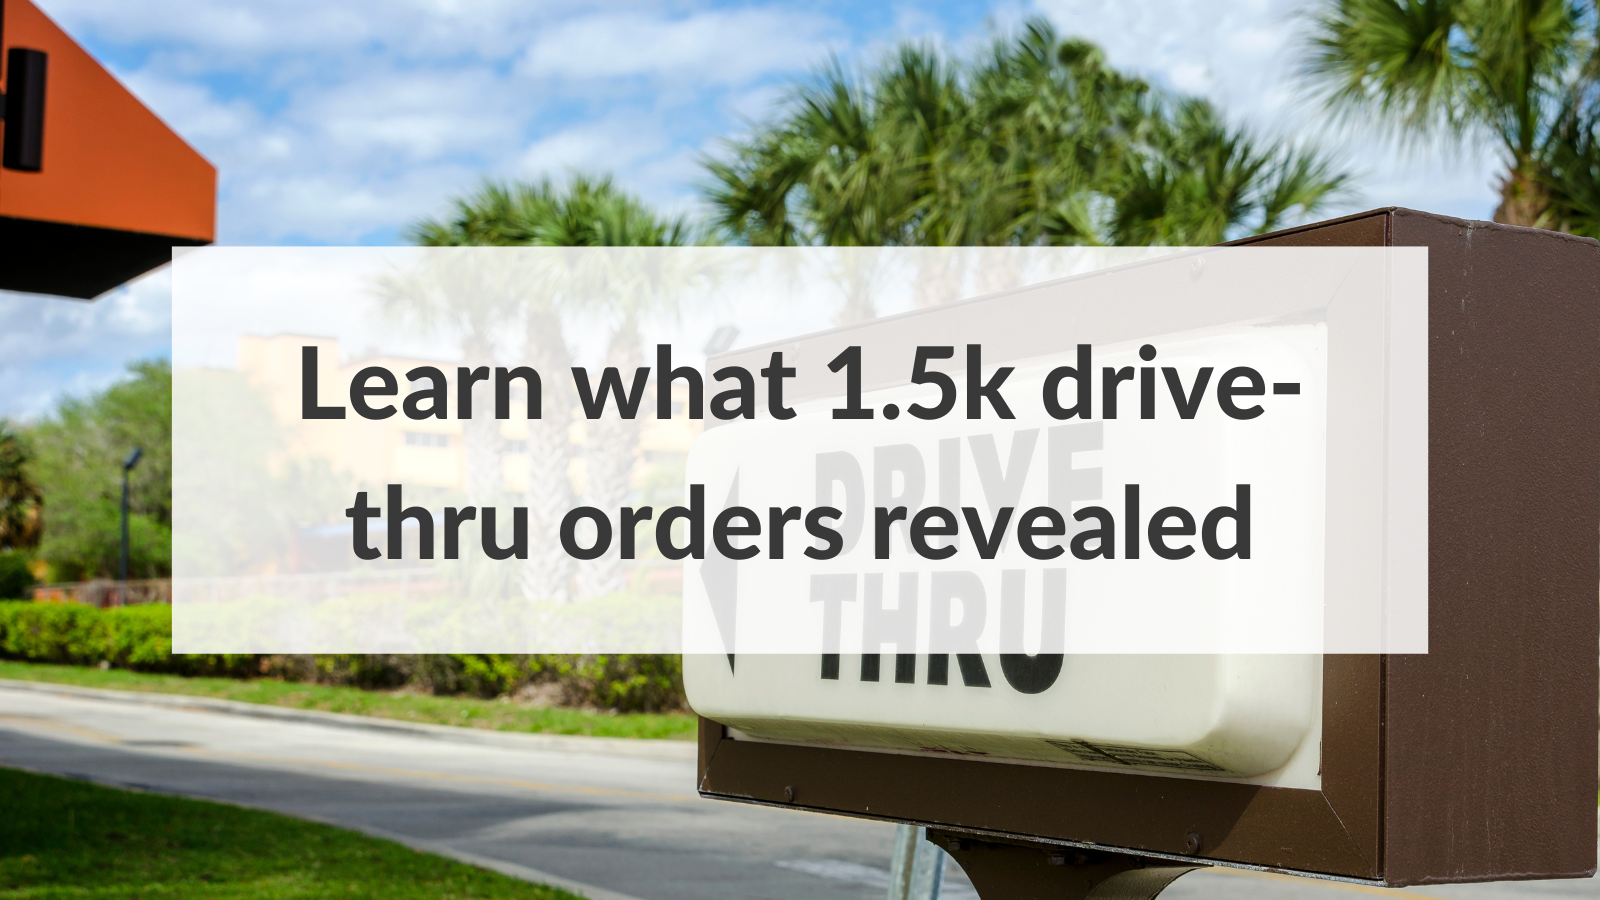 Learn what 1.5k drive-thru orders revealed in a drive-thru study, one of a kind.